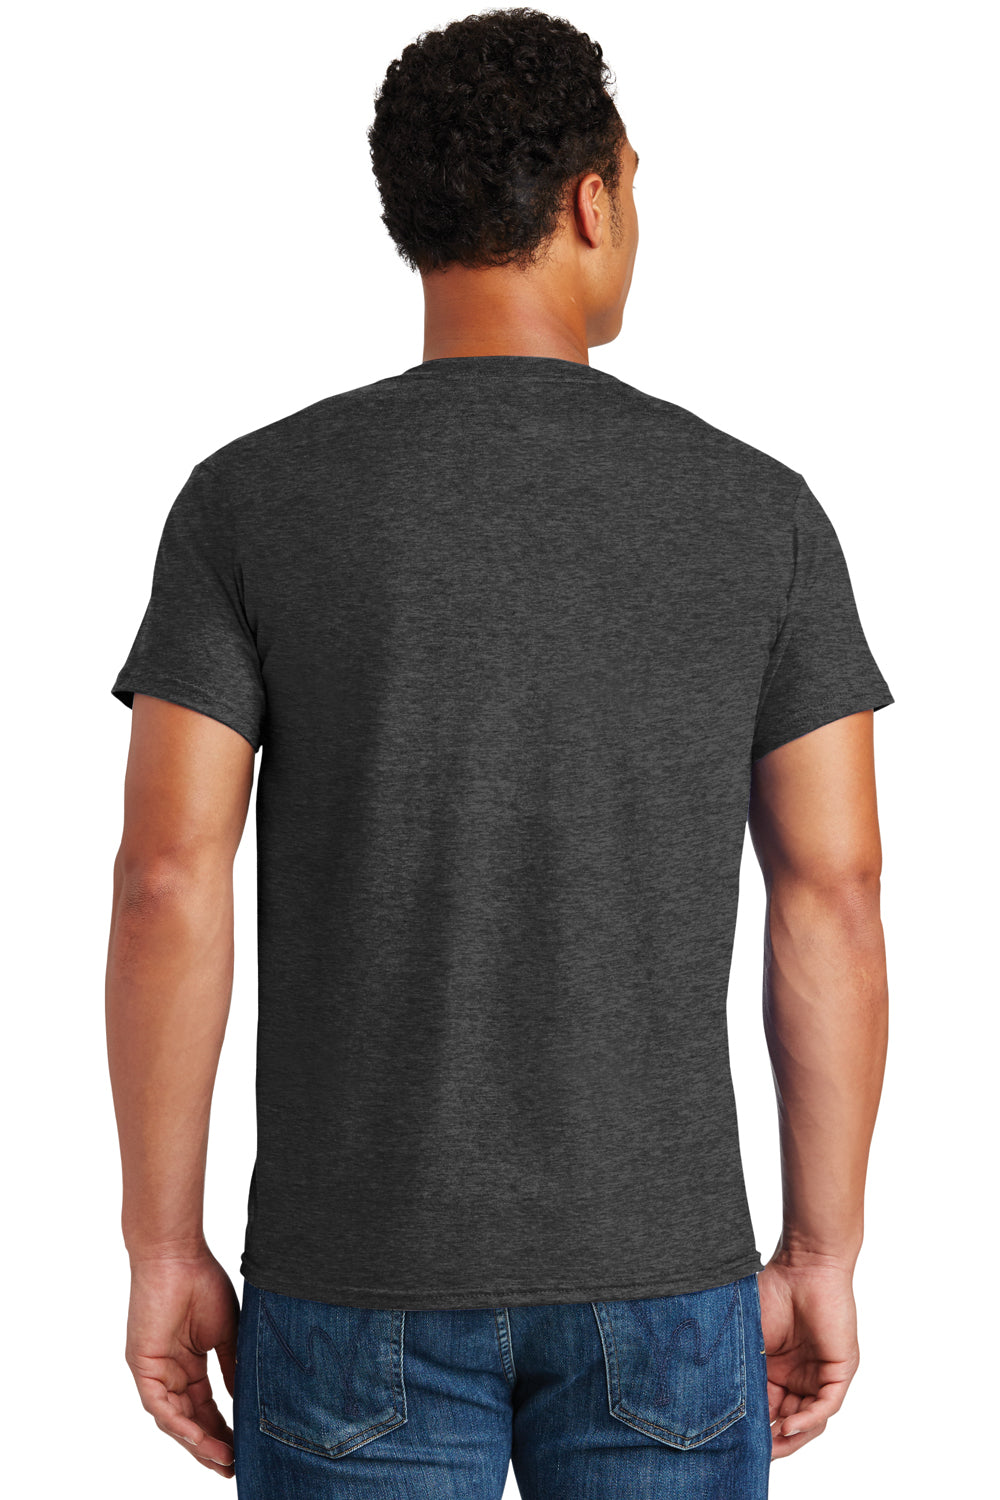 Hanes 4980 Mens Nano-T Short Sleeve Crewneck T-Shirt Heather Charcoal Grey Back